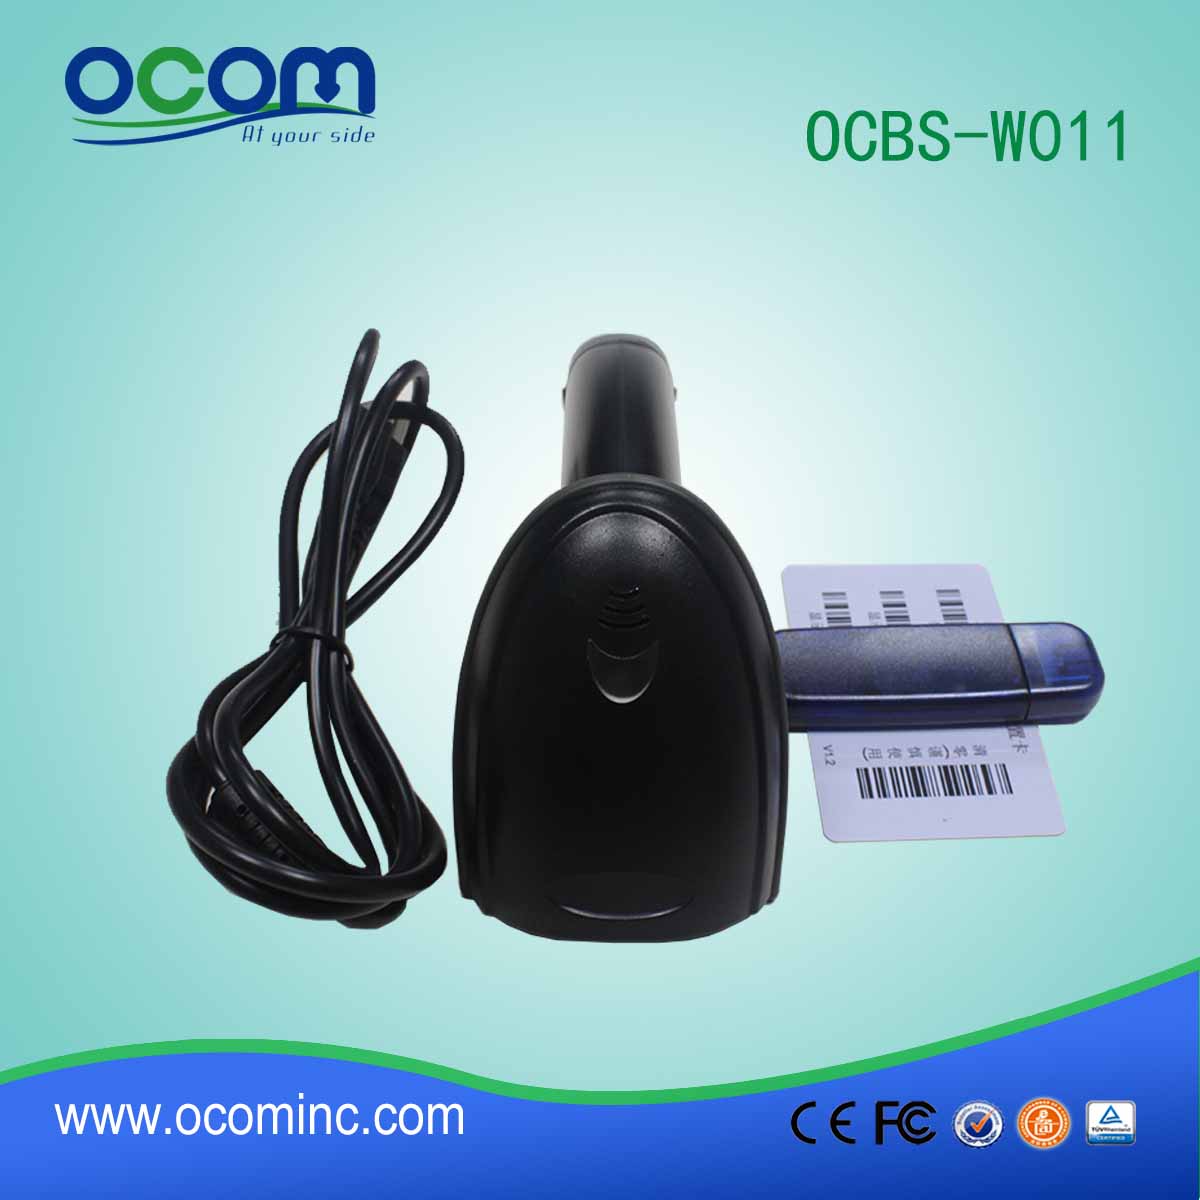 OCBs-W011 bluetooth ασύρματο barcode scanner με θύρα USB